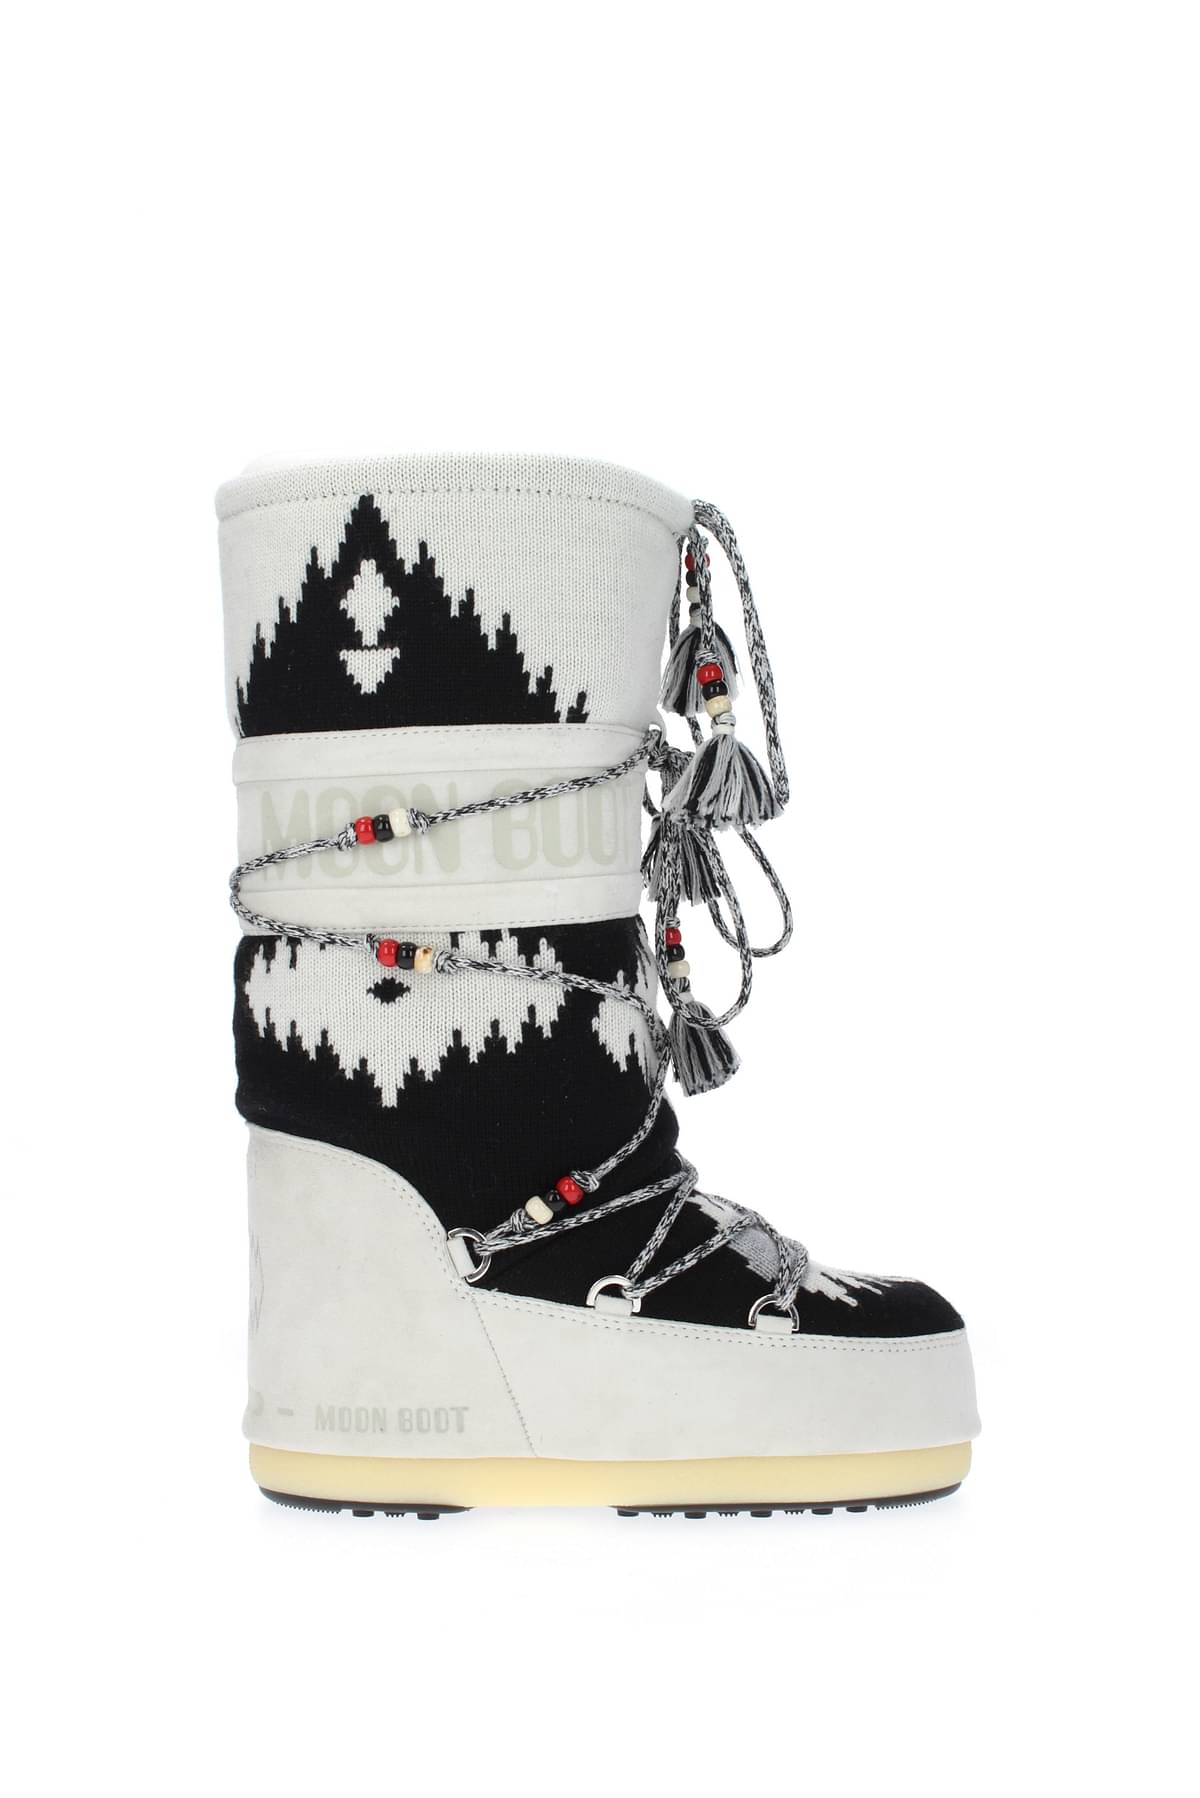 Alanui Boots moon boot Women 14052600003 Fabric Gray Black 582,56€